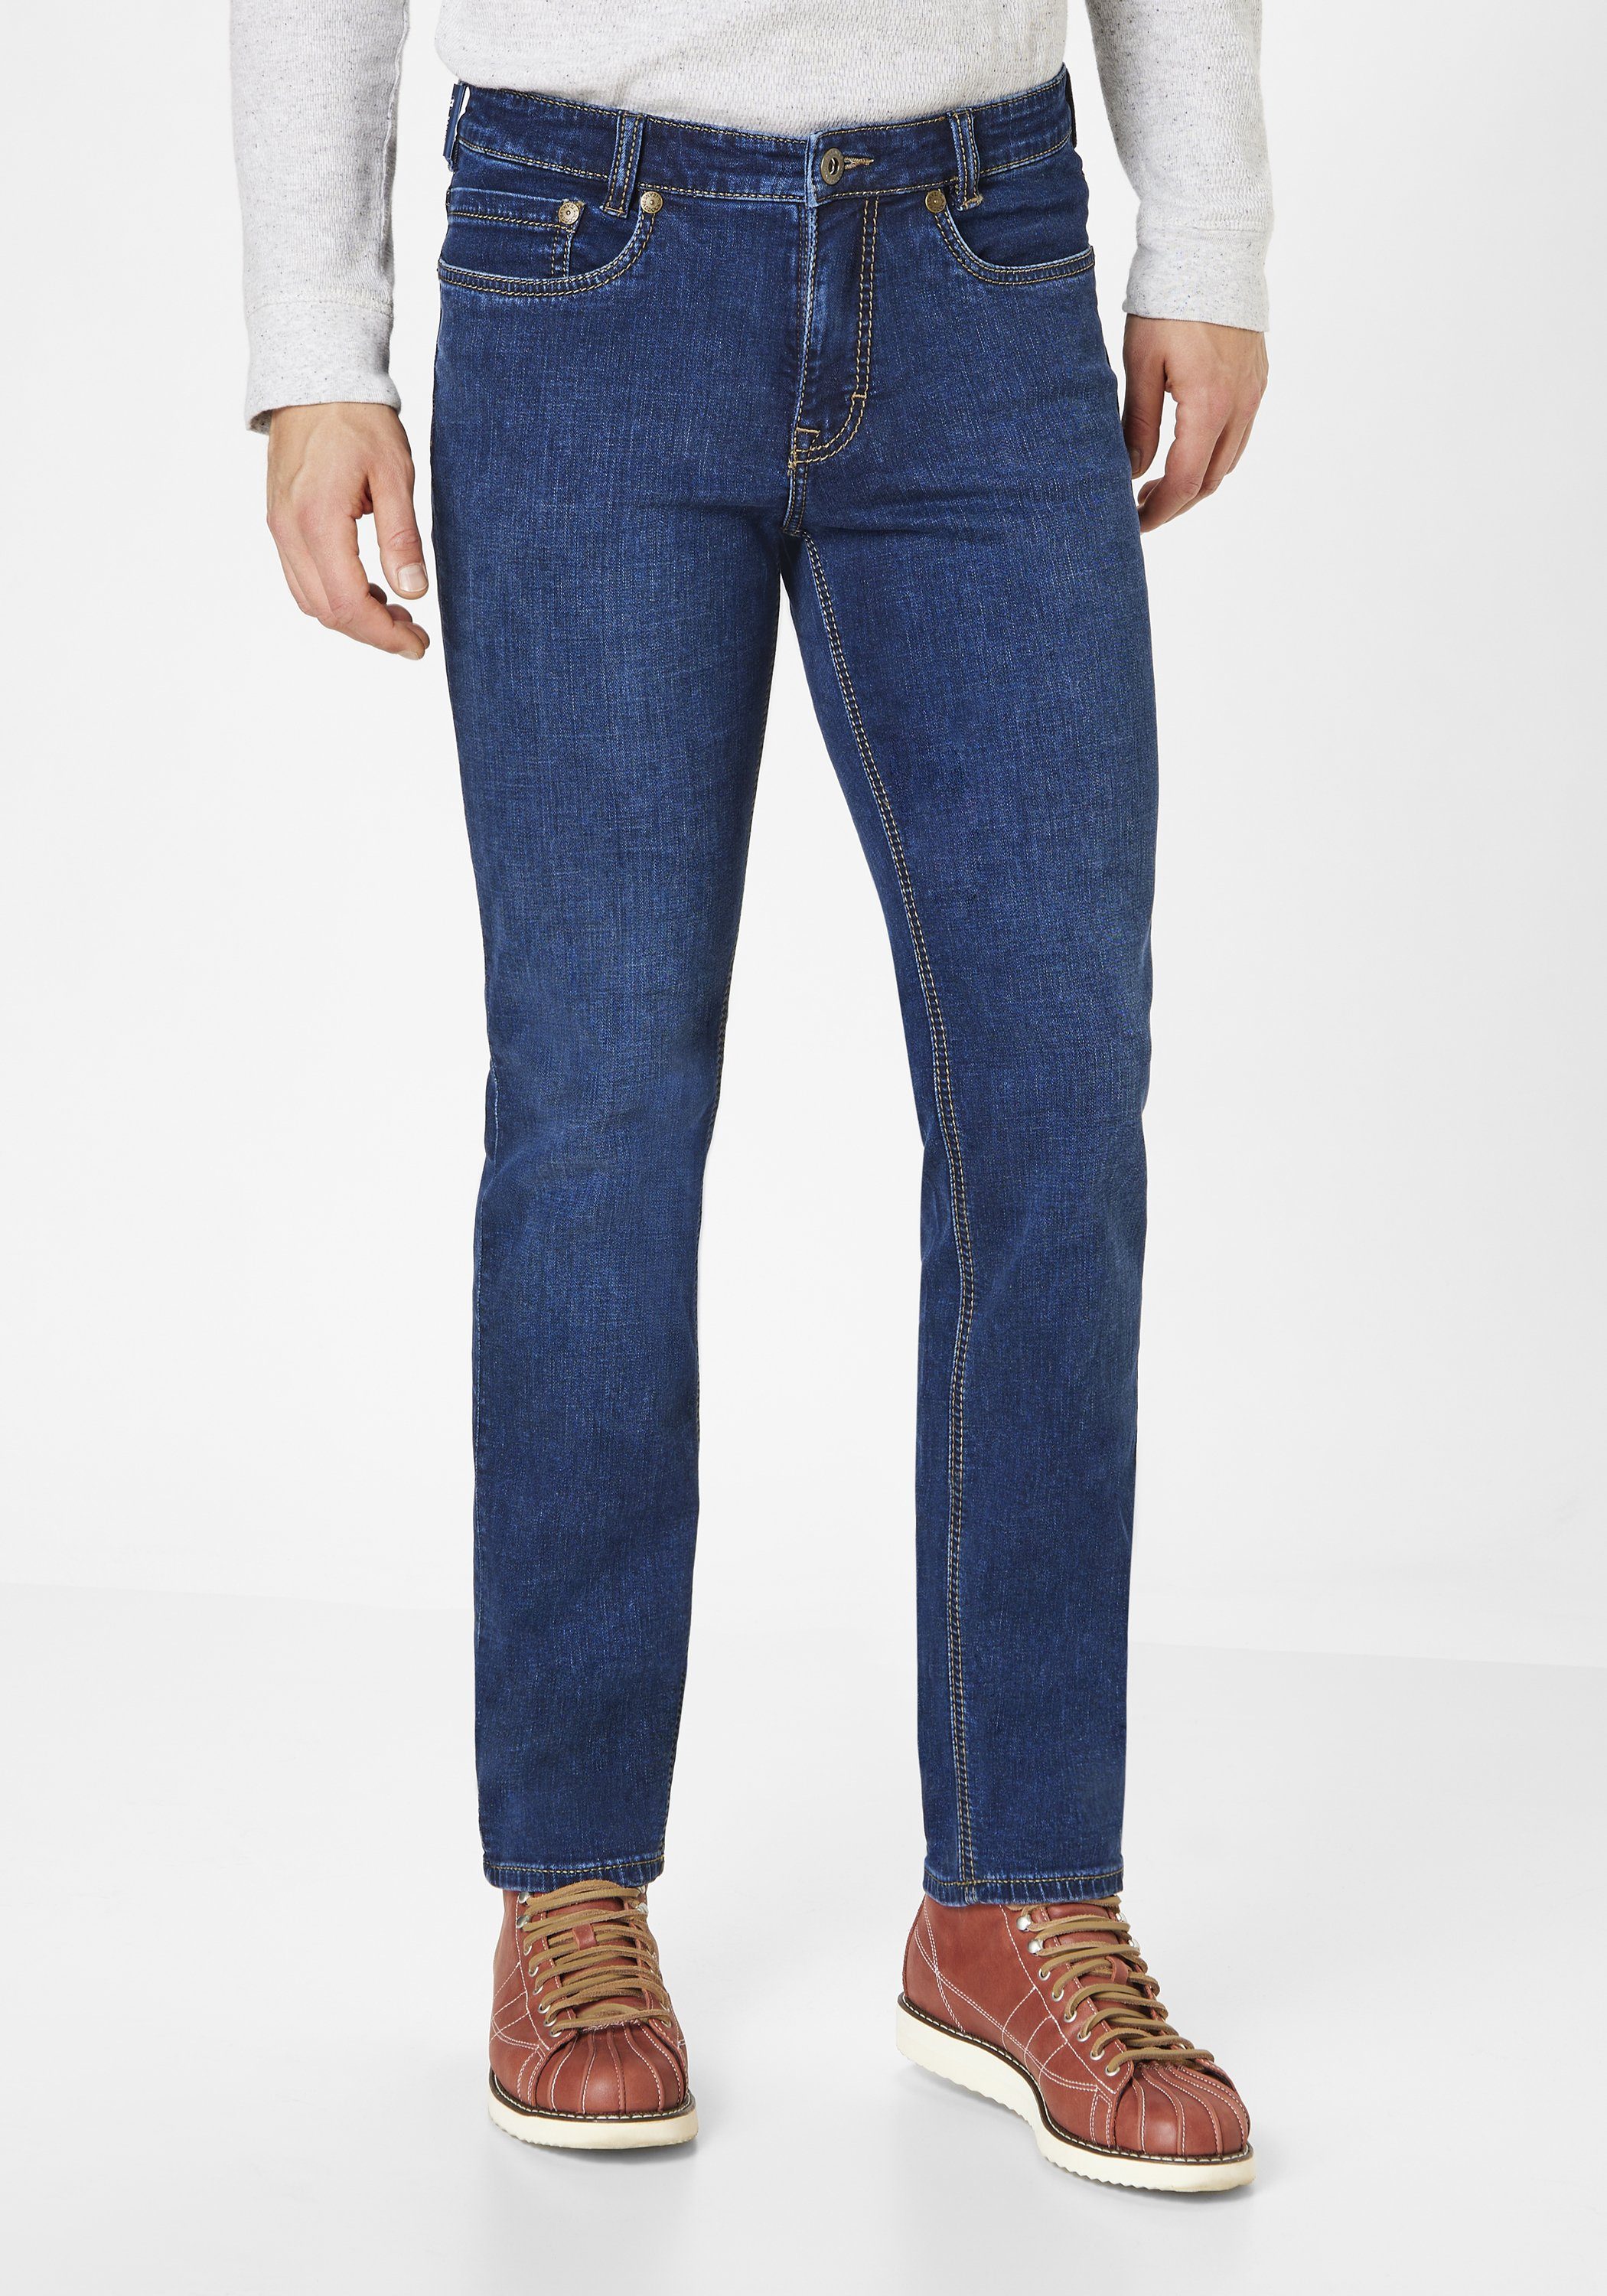 Paddock's Slim-fit-Jeans RANGER PIPE Slim-Fit Jeans Motion & Comfort und Saddle Stitch dark blue used